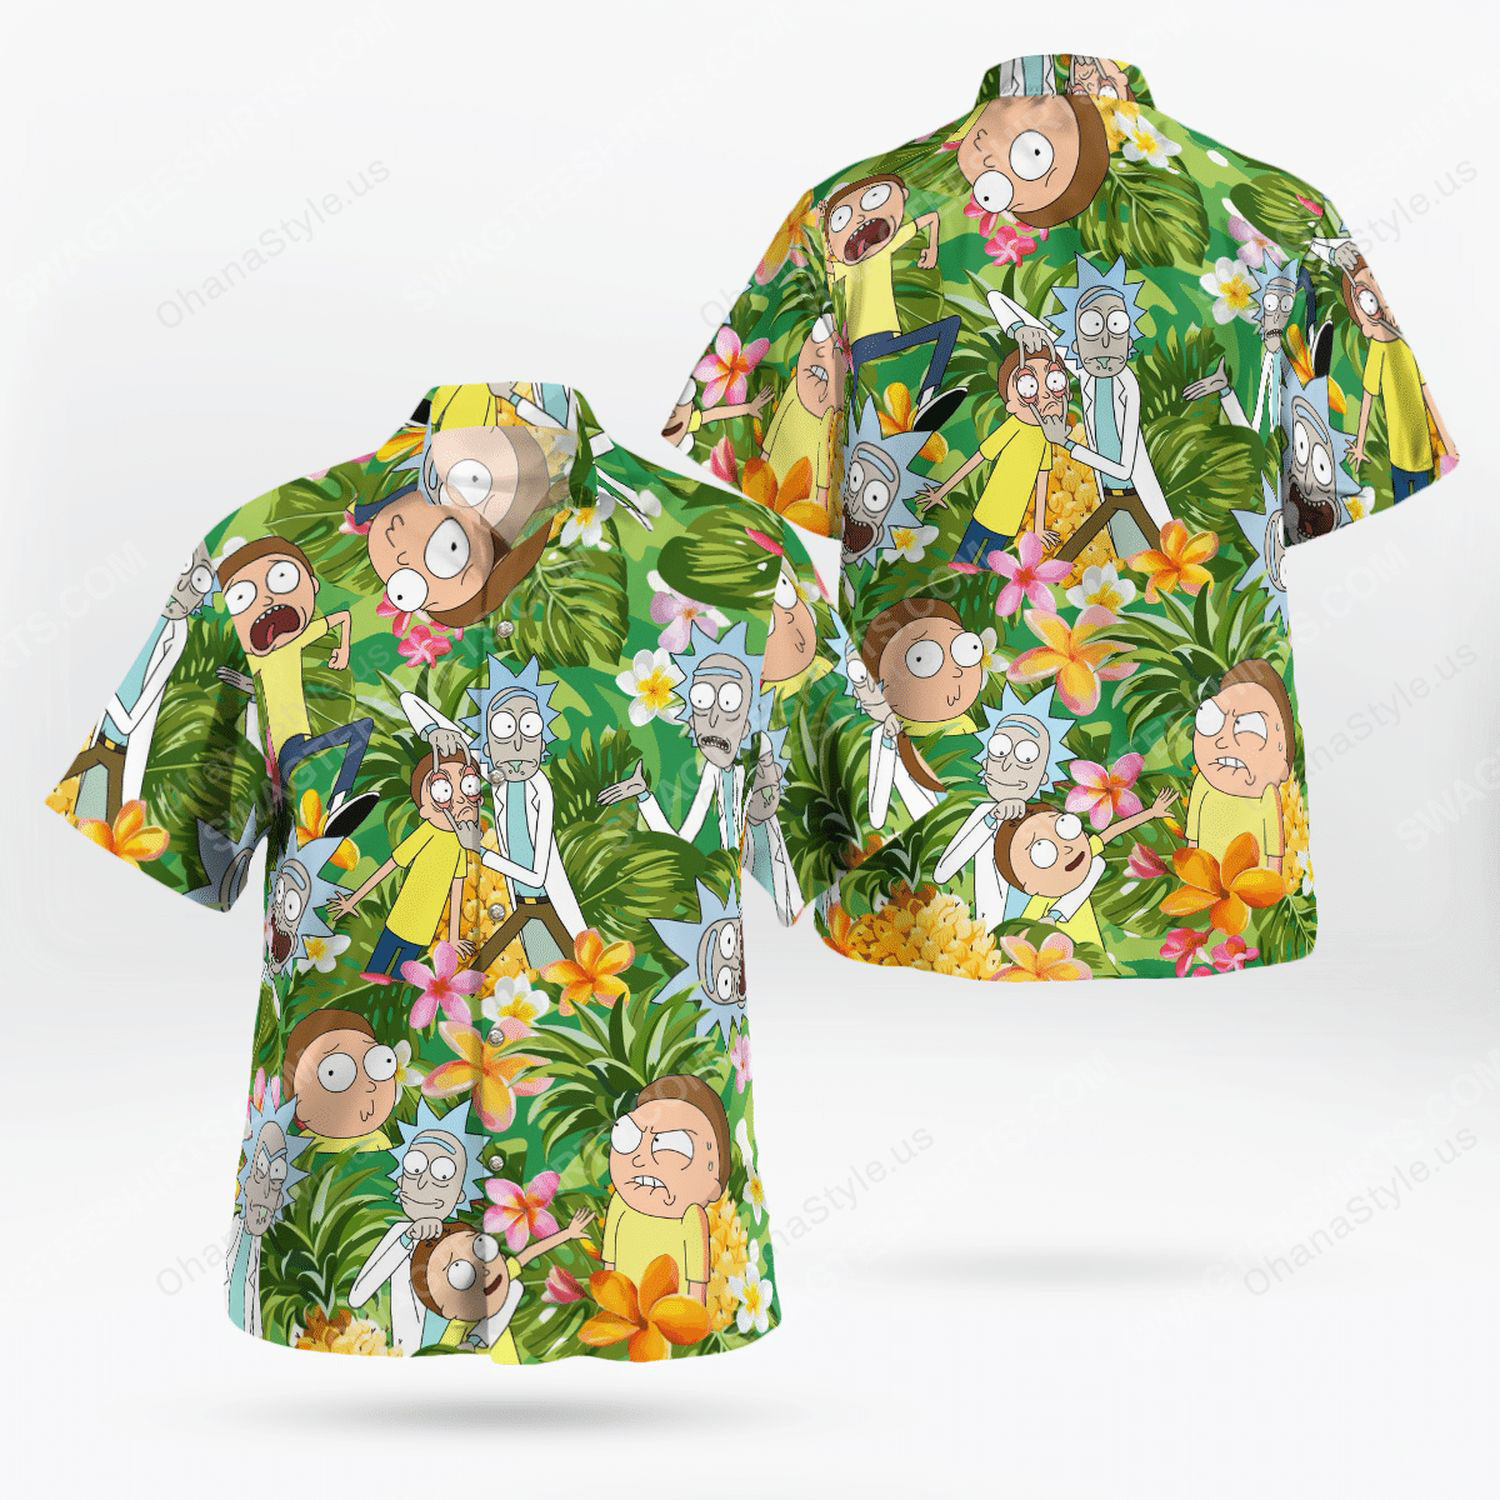 Rick and morty tropical hawaiian shirt 1 - Copy